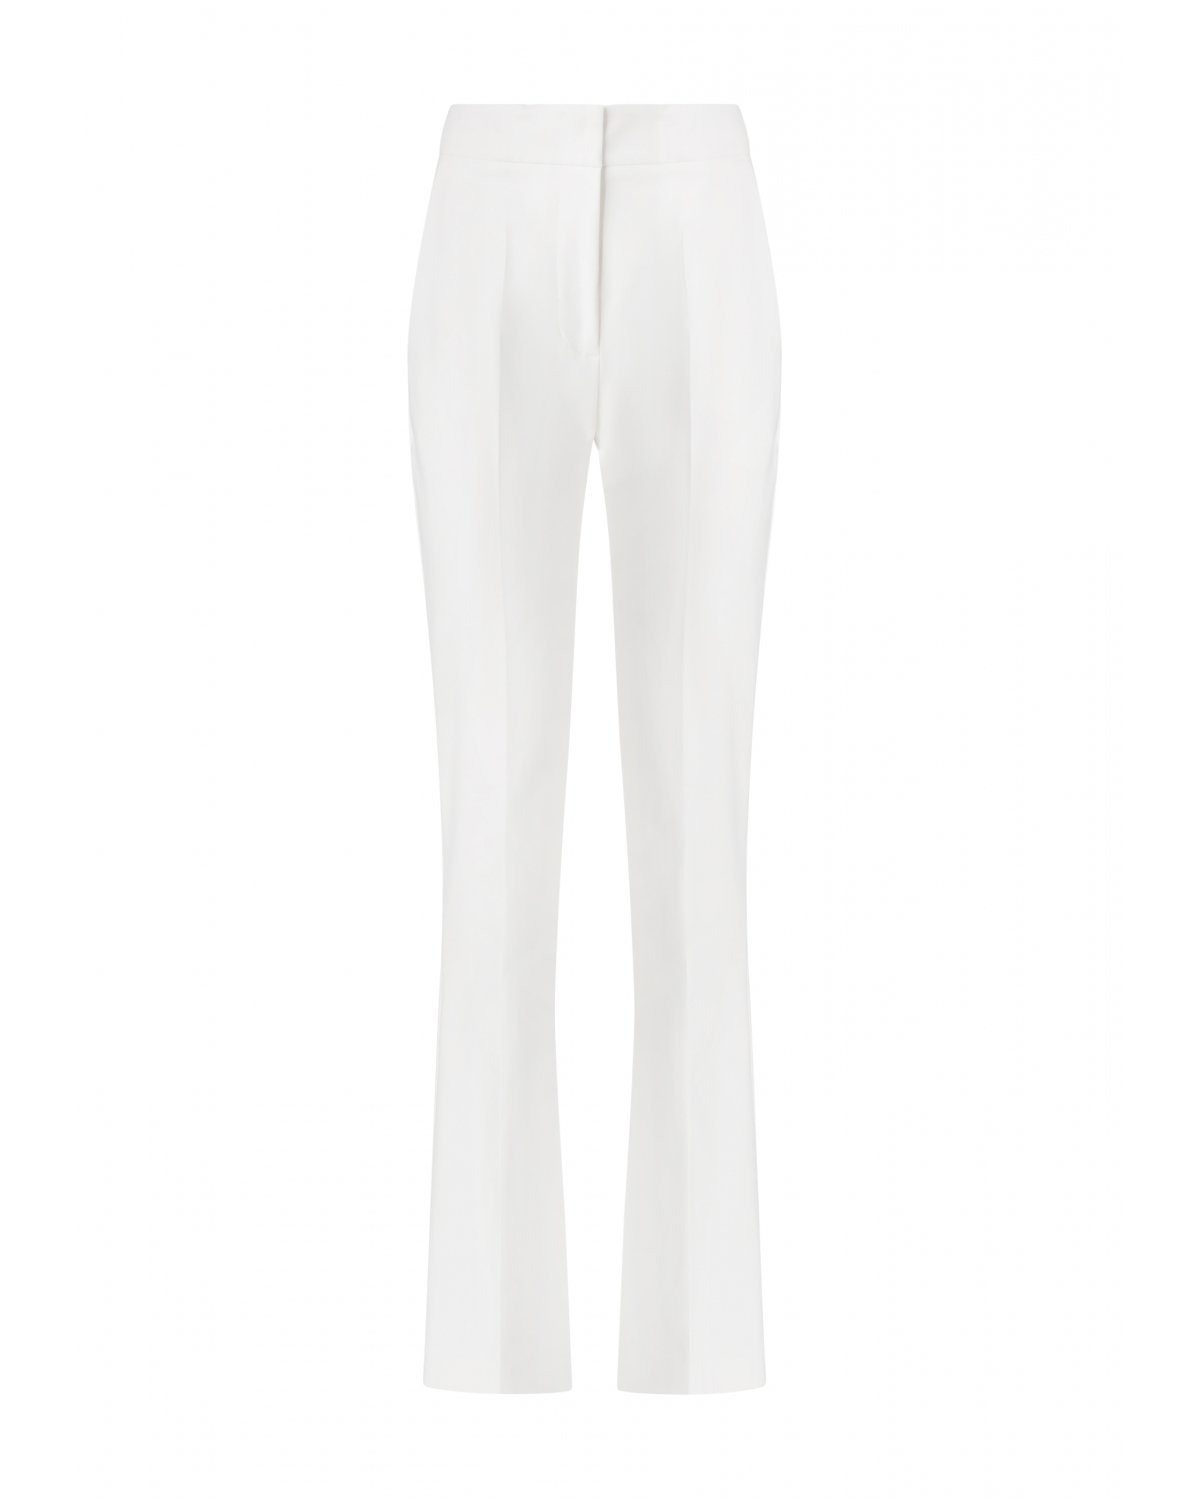 Pantalone bianco aderente a zampa | 73_74 | Genny